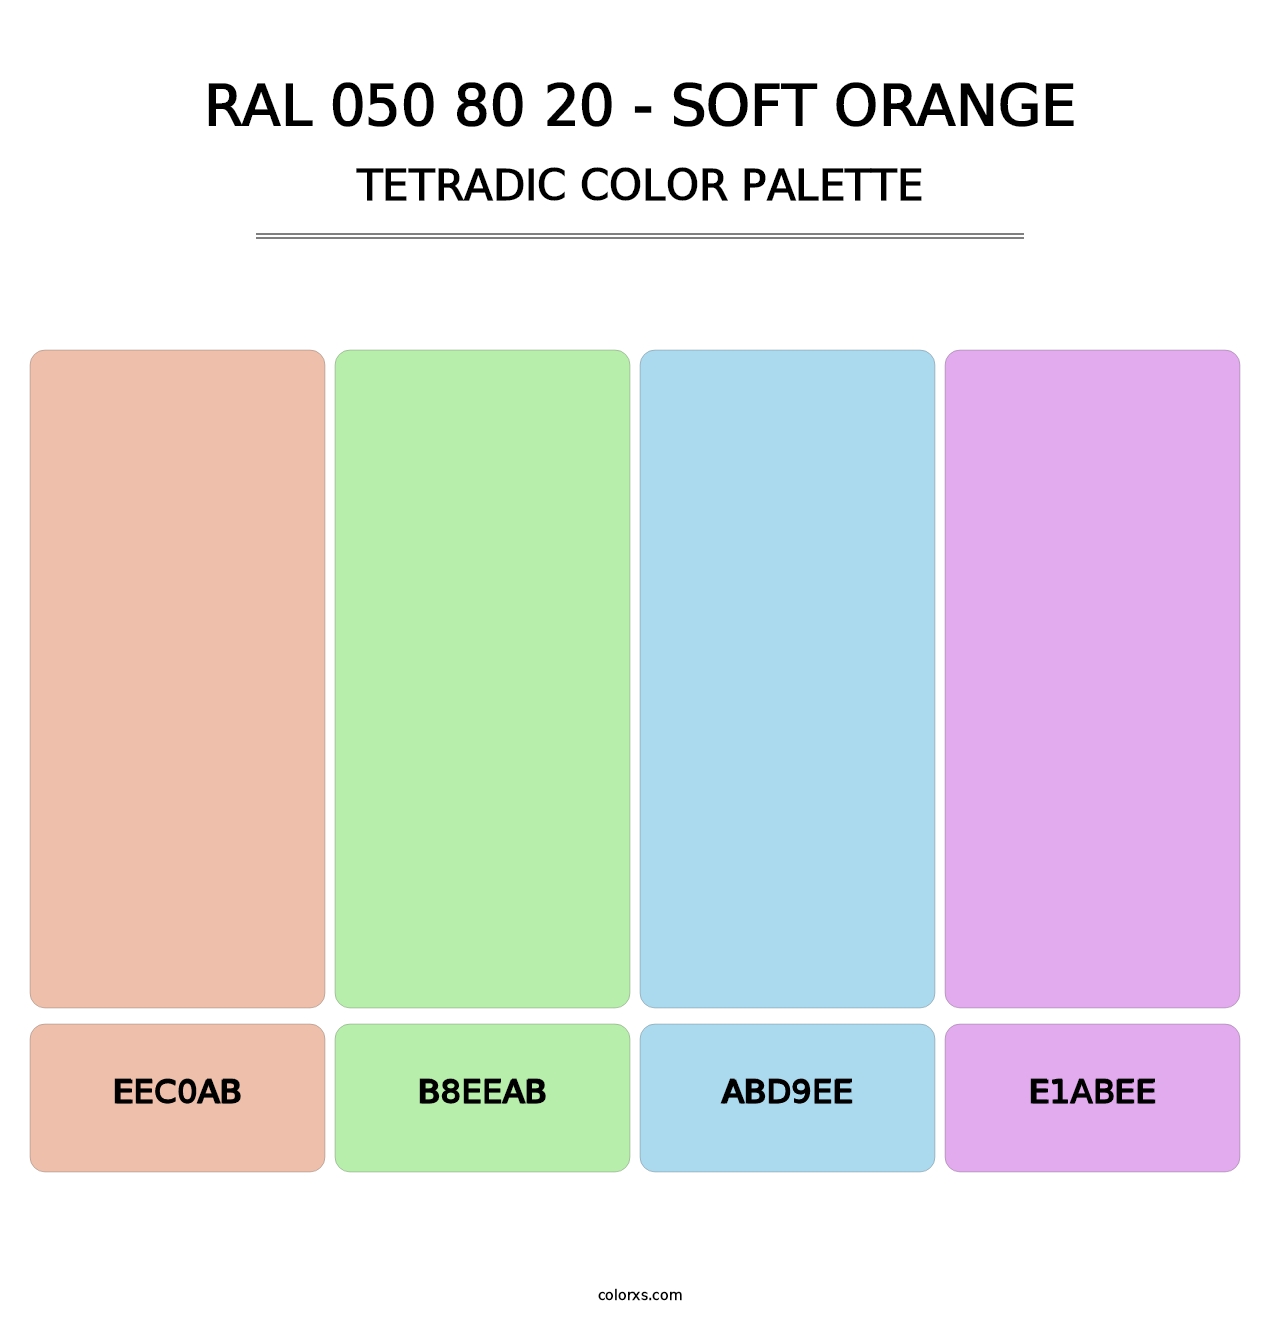 RAL 050 80 20 - Soft Orange - Tetradic Color Palette